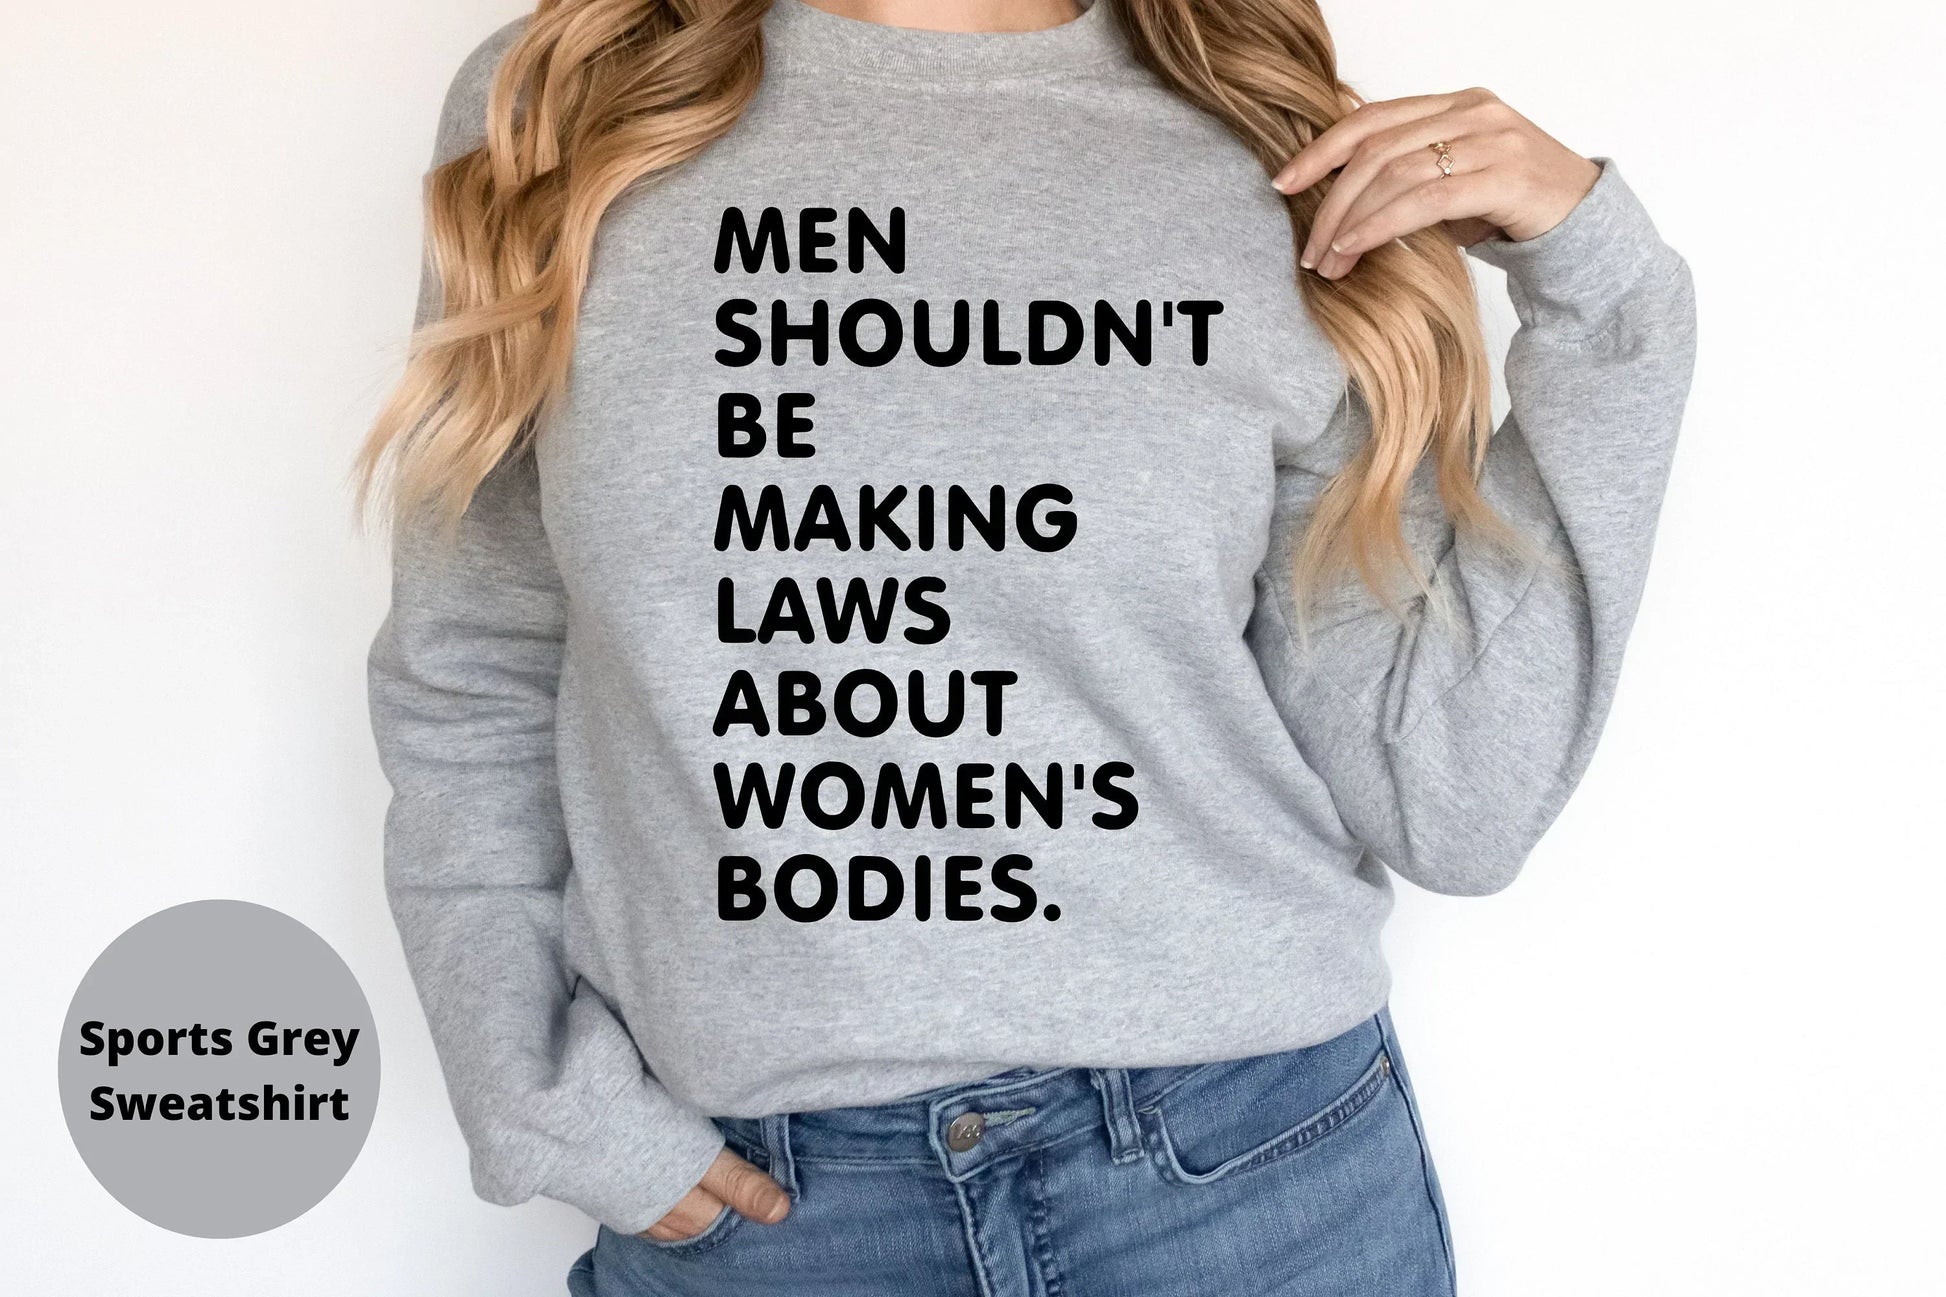 My Body My Choice Shirt, Protest T-Shirt, Abortion Rights, Female Pro Choice Shirt, Roe vs Wade,Activist,Equality Sweatshirt,Feminist Hoodie HMDesignStudioUS